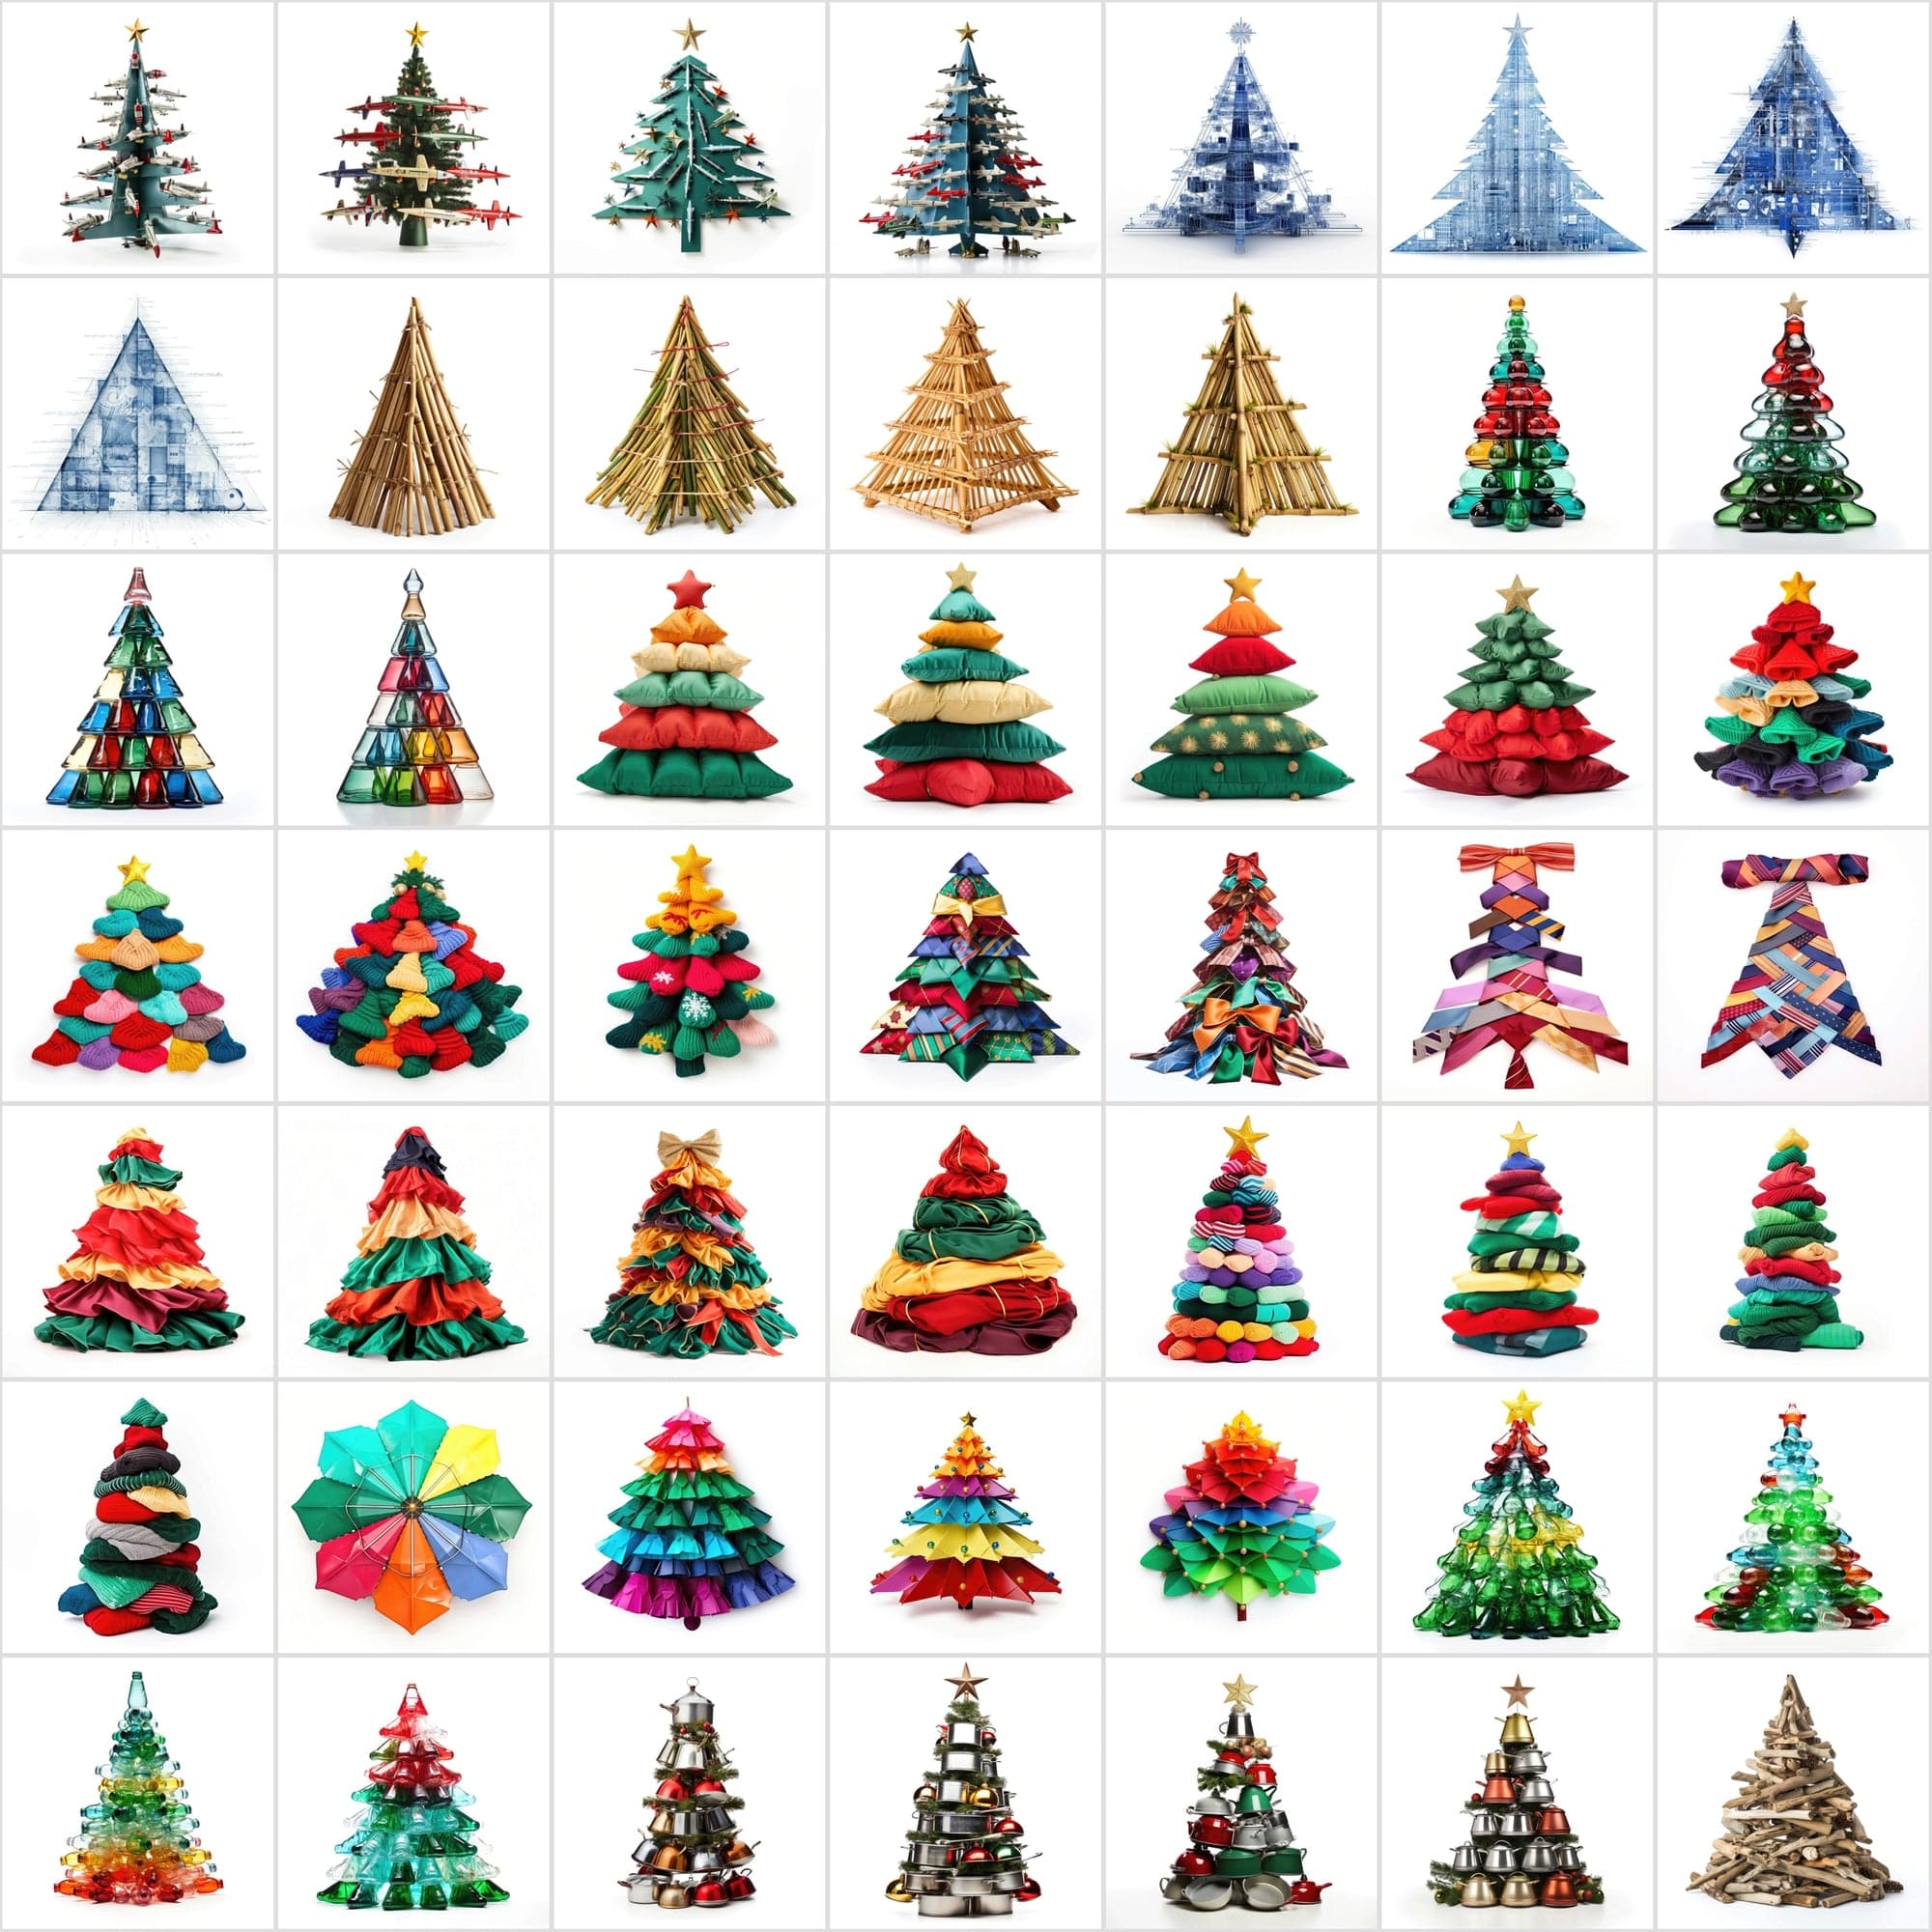 590 Unique Conceptual Christmas Tree Images Collection - High-Resolution Digital Art, Instant Download Digital Download Sumobundle